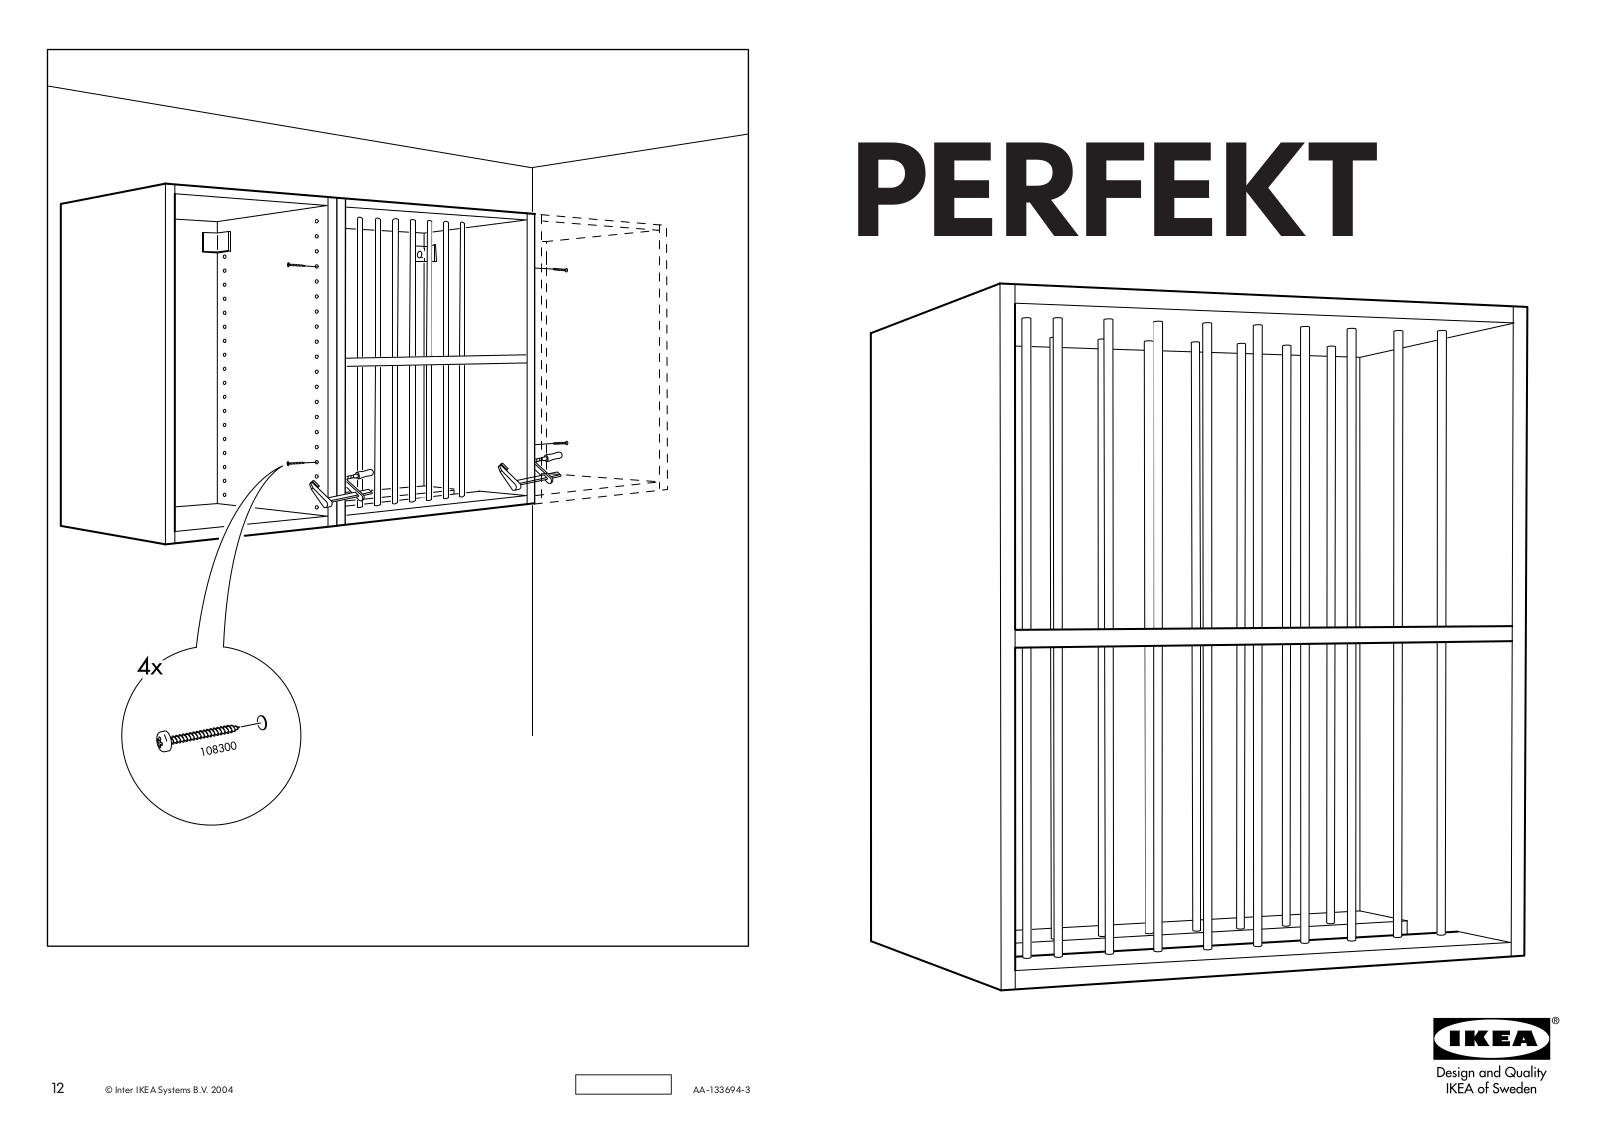 IKEA PERFEKT PLATE SHELF, PERFEKT LILJE PLATE SHLF Assembly Instruction